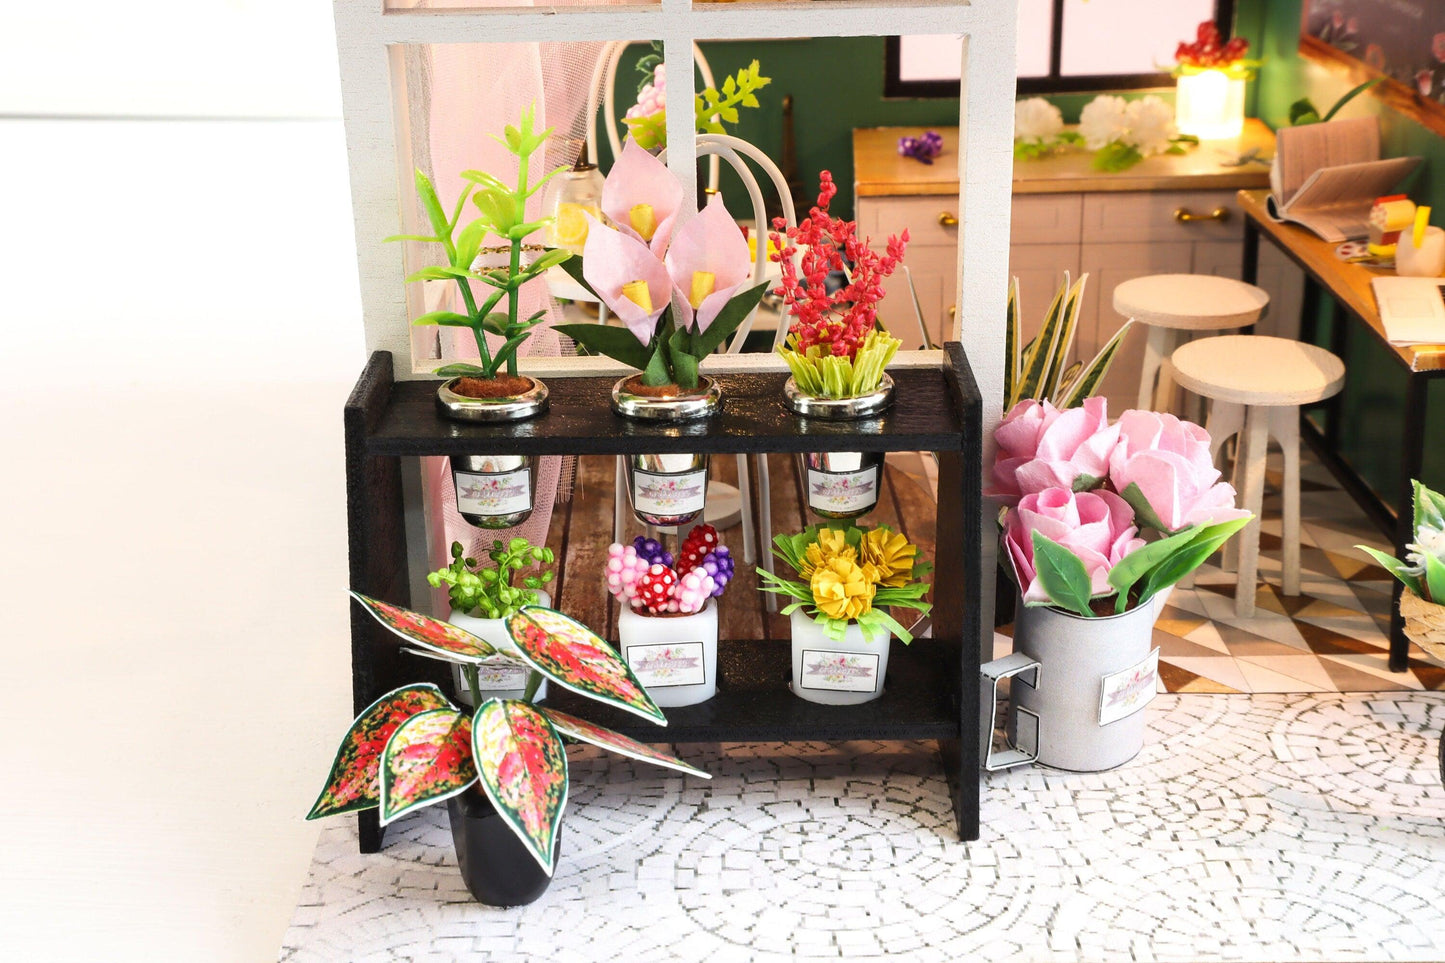 Flower Lane Flowers Shop Miniature - DIY Dollhouse Kit - Modern Shop With Mini Bike - Shop Dollhouse Miniature - Adult Craft - Best Gift - Rajbharti Crafts